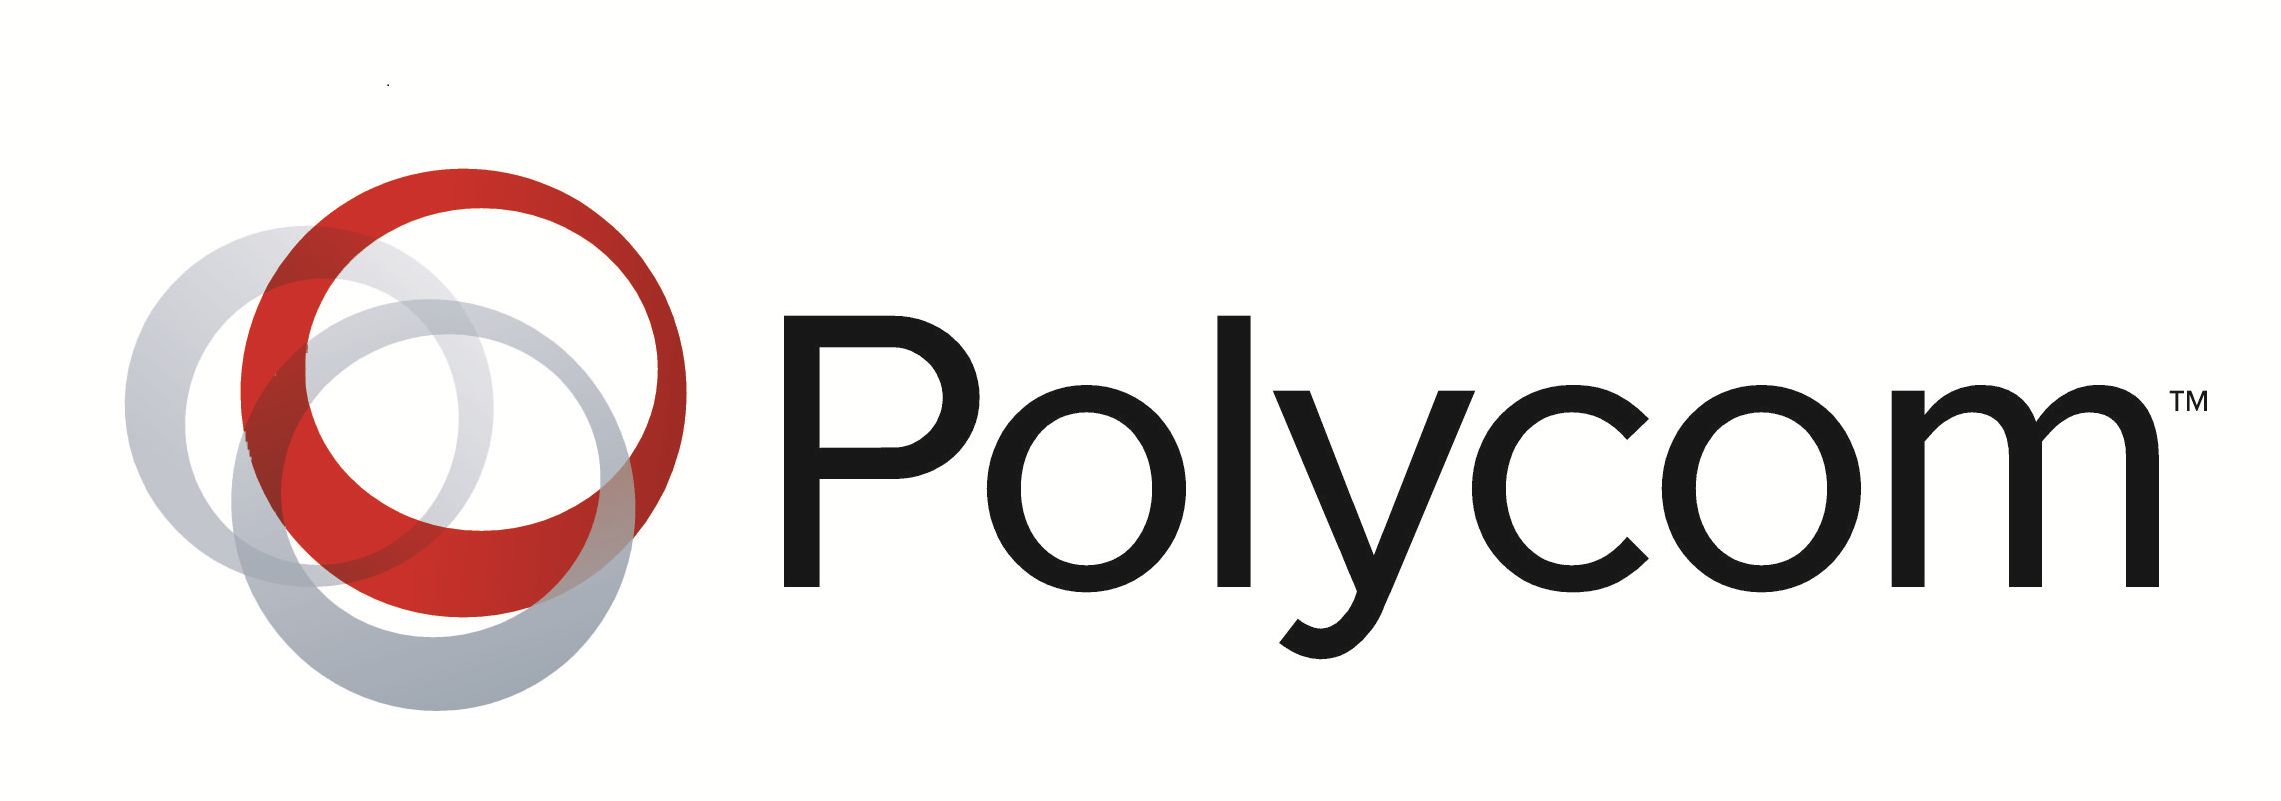 POLYCOM 新LOGO